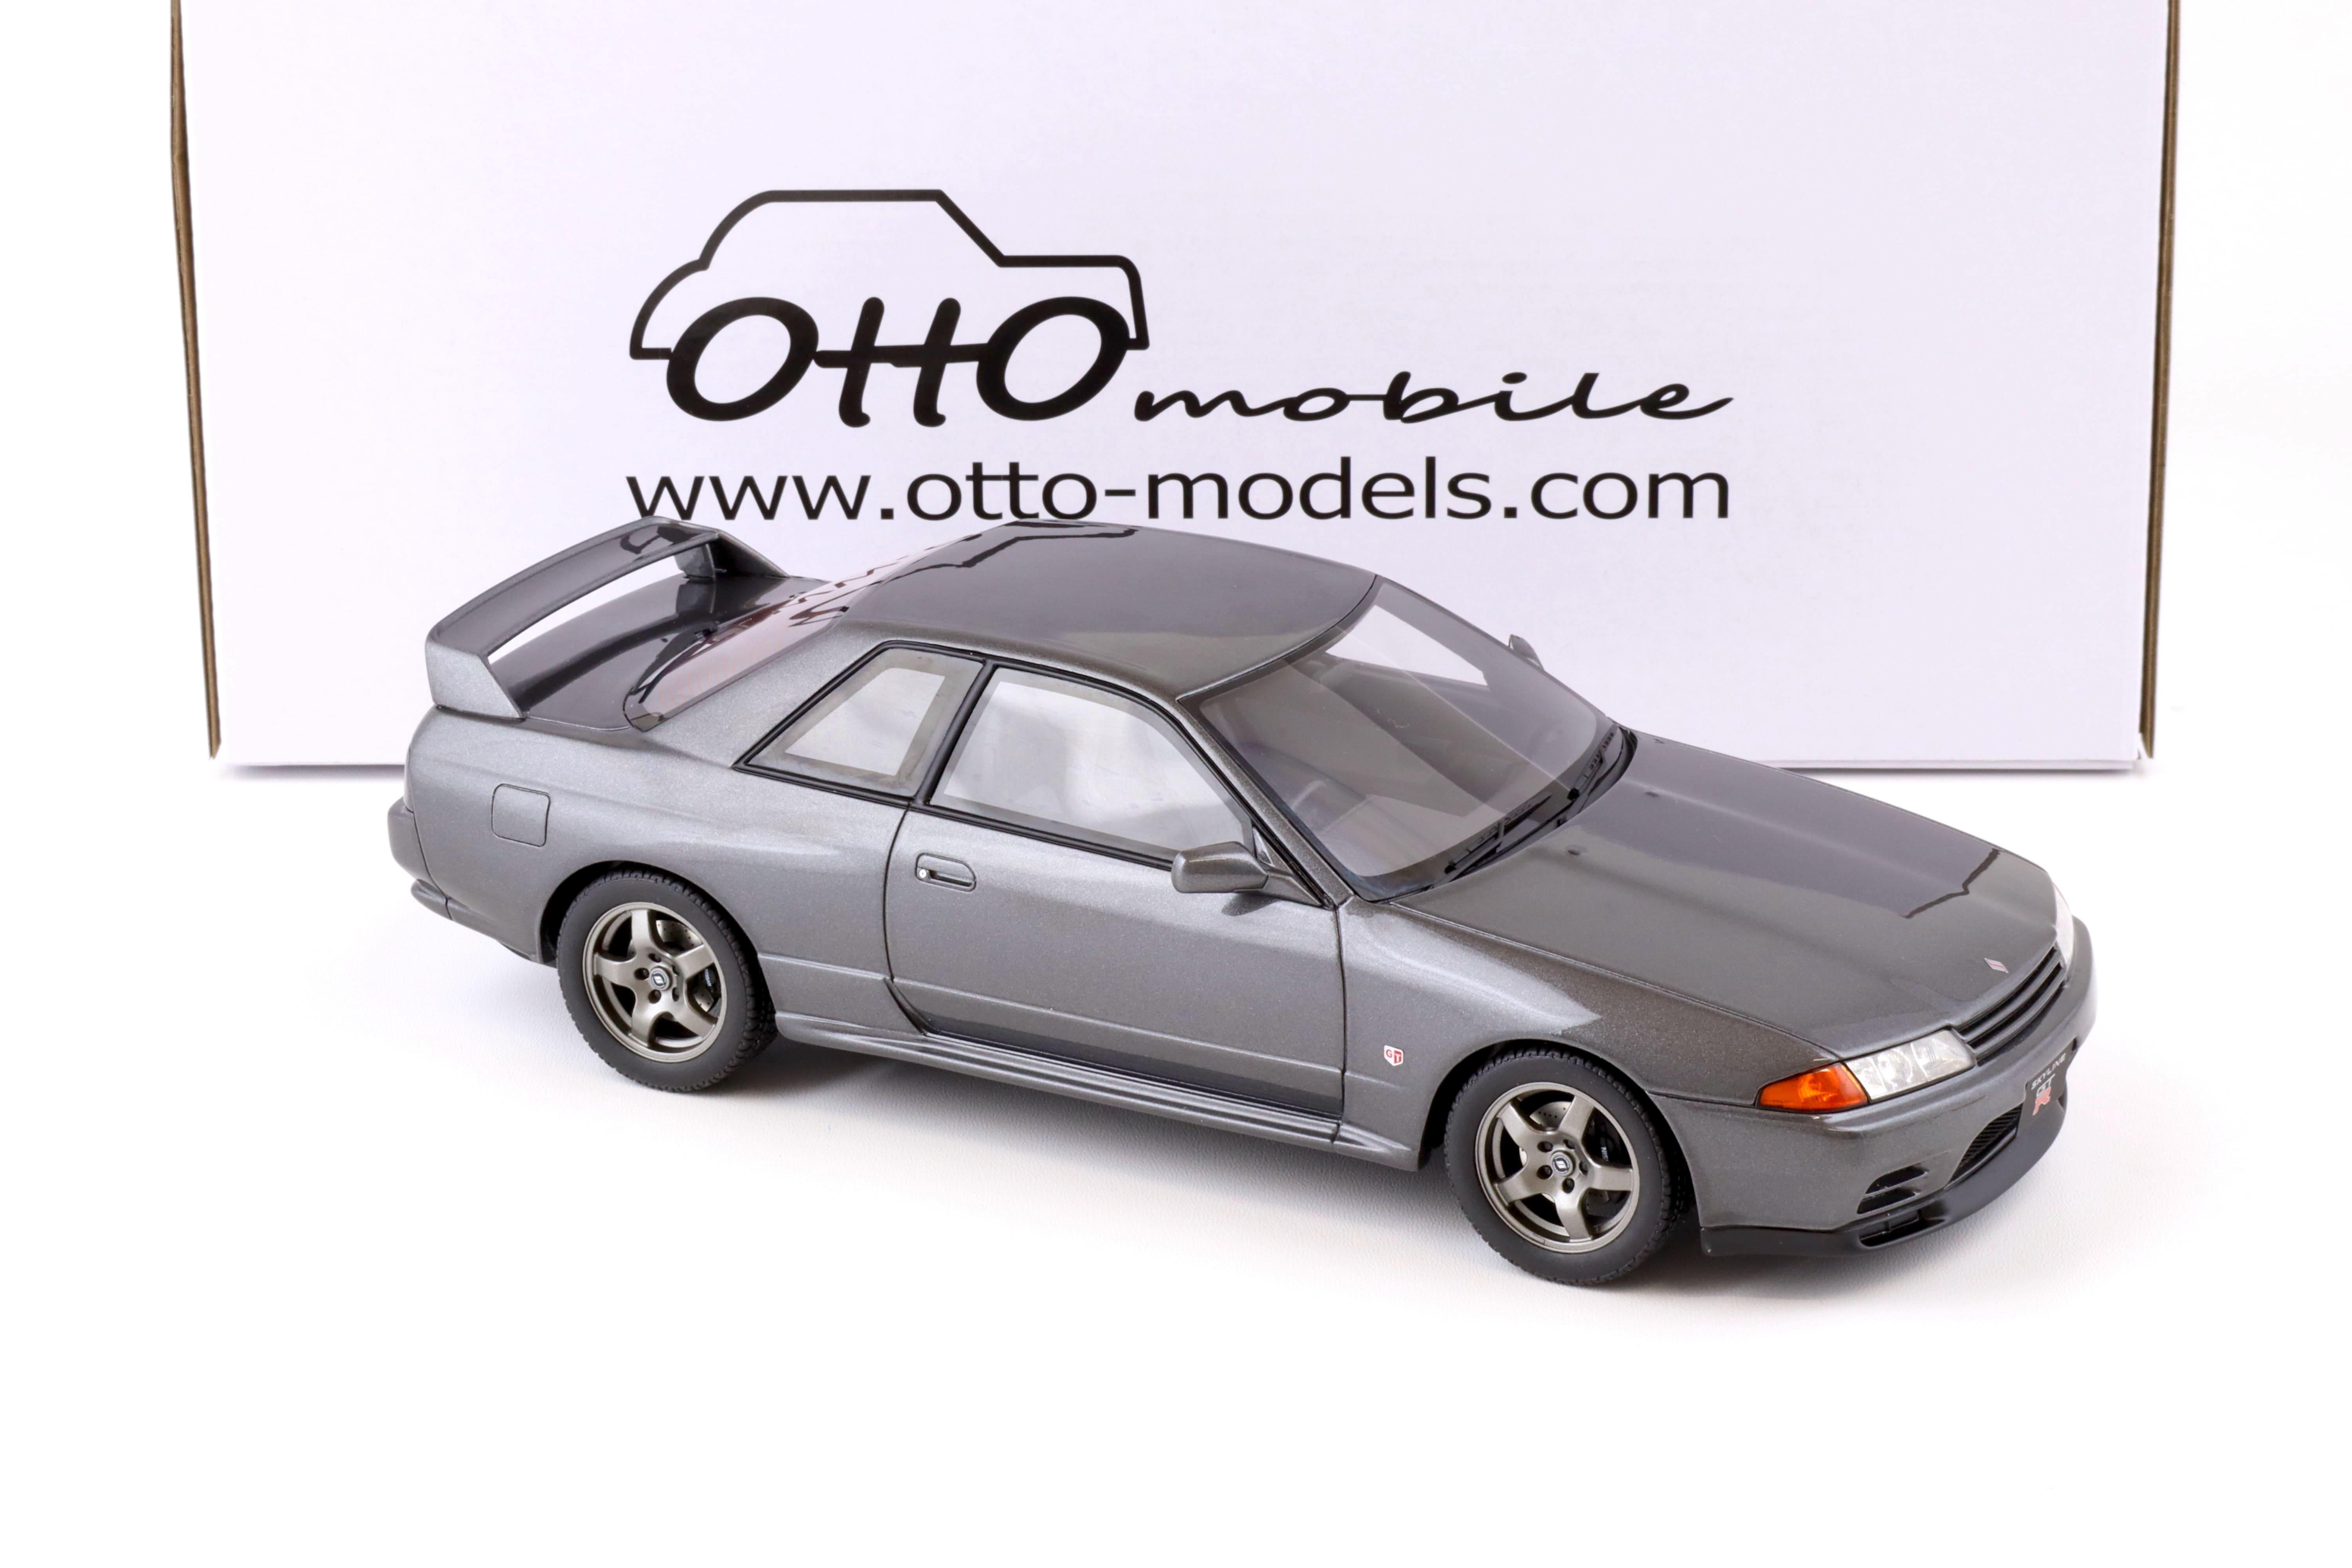 1:18 OTTO mobile OT411 Nissan Skyline GT-R BNR32 grey metallic 1993